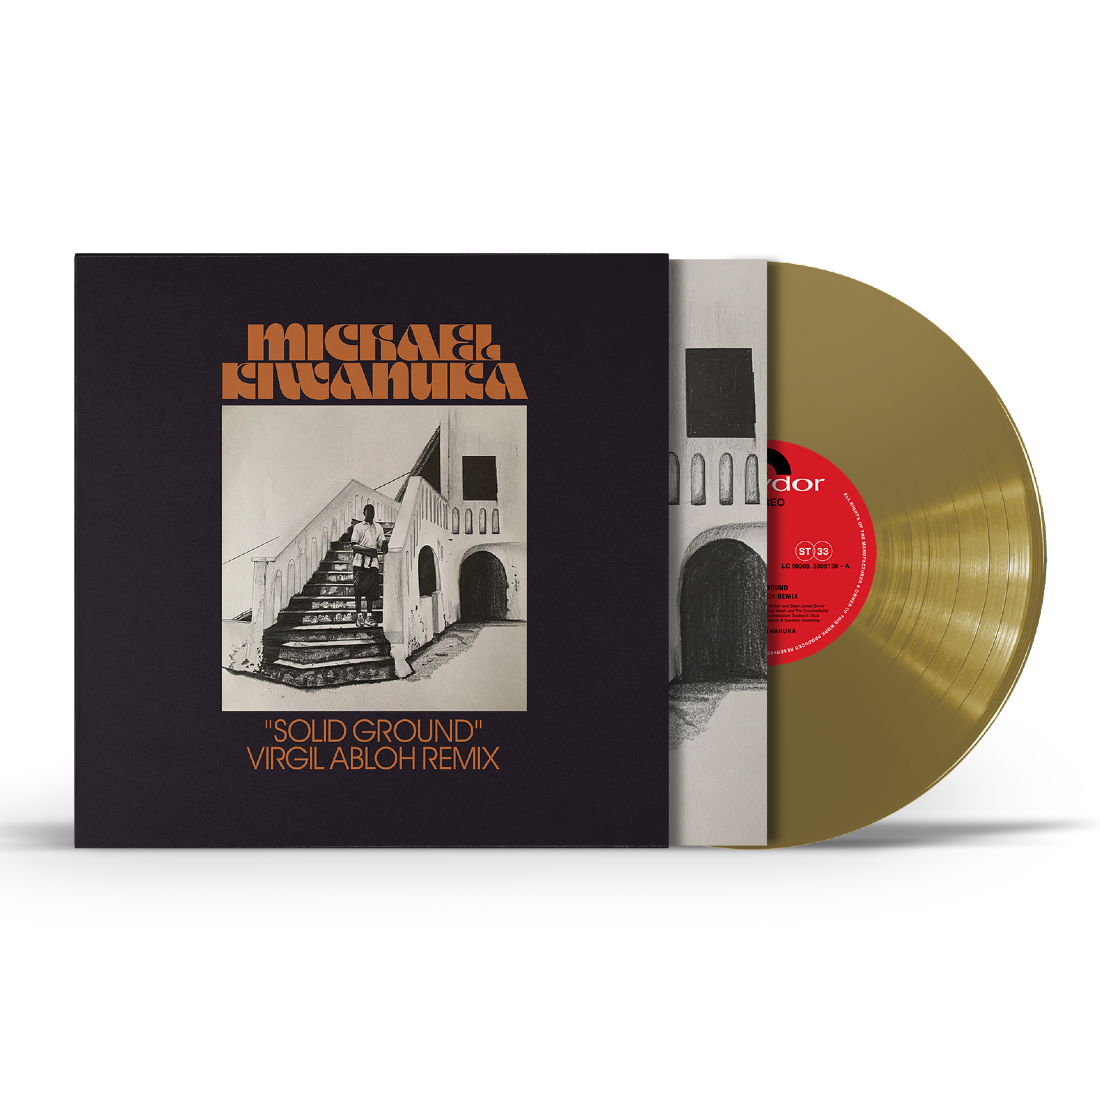 Michael Kiwanuka - Solid Ground (Virgil Abloh Remix) Single Heavyweight Gold 10” Vinyl